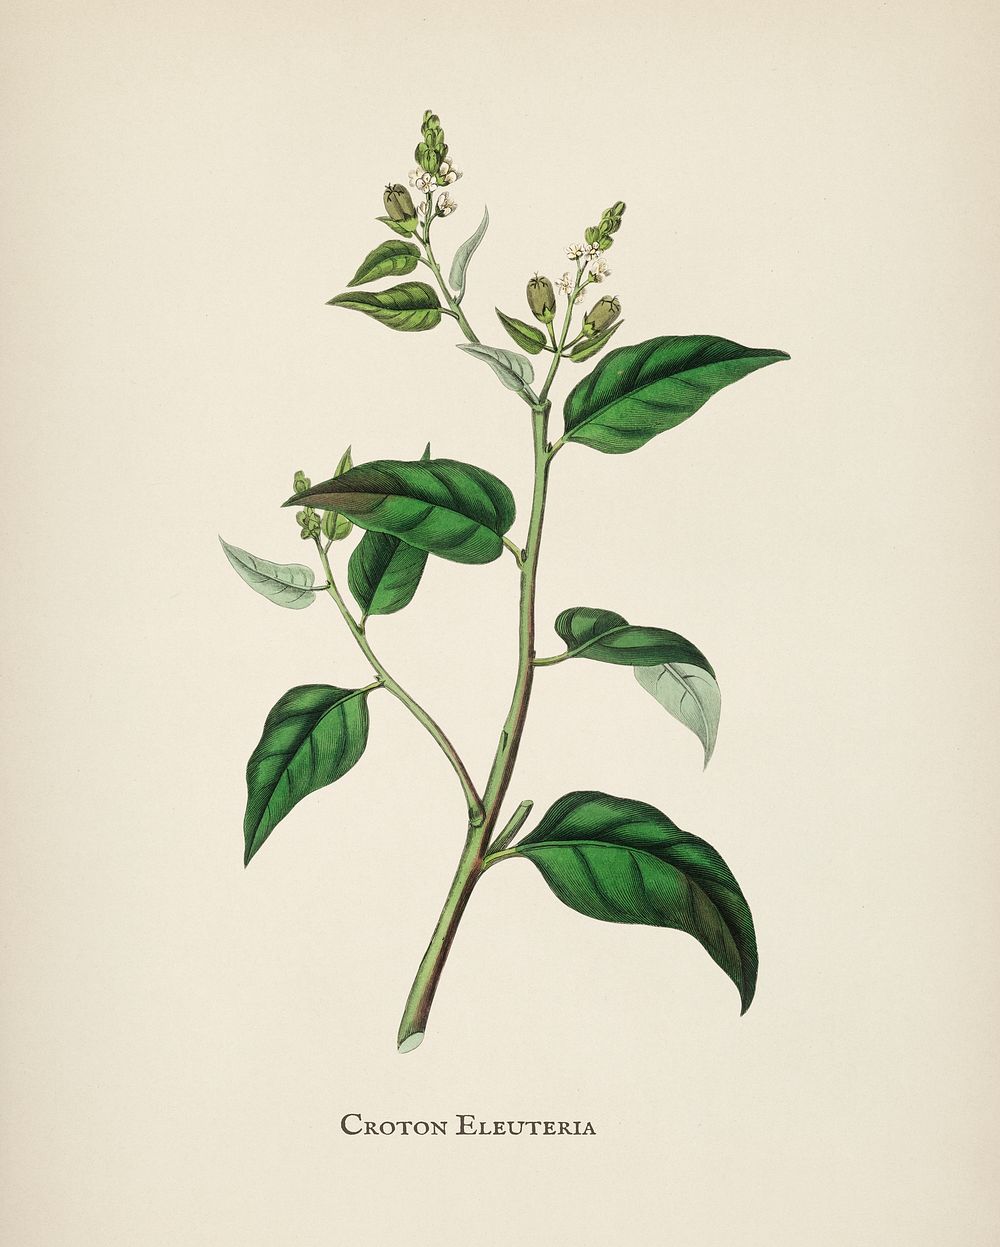 Croton eleuteria illustration from Medical Botany (1836) by John Stephenson and James Morss Churchill.